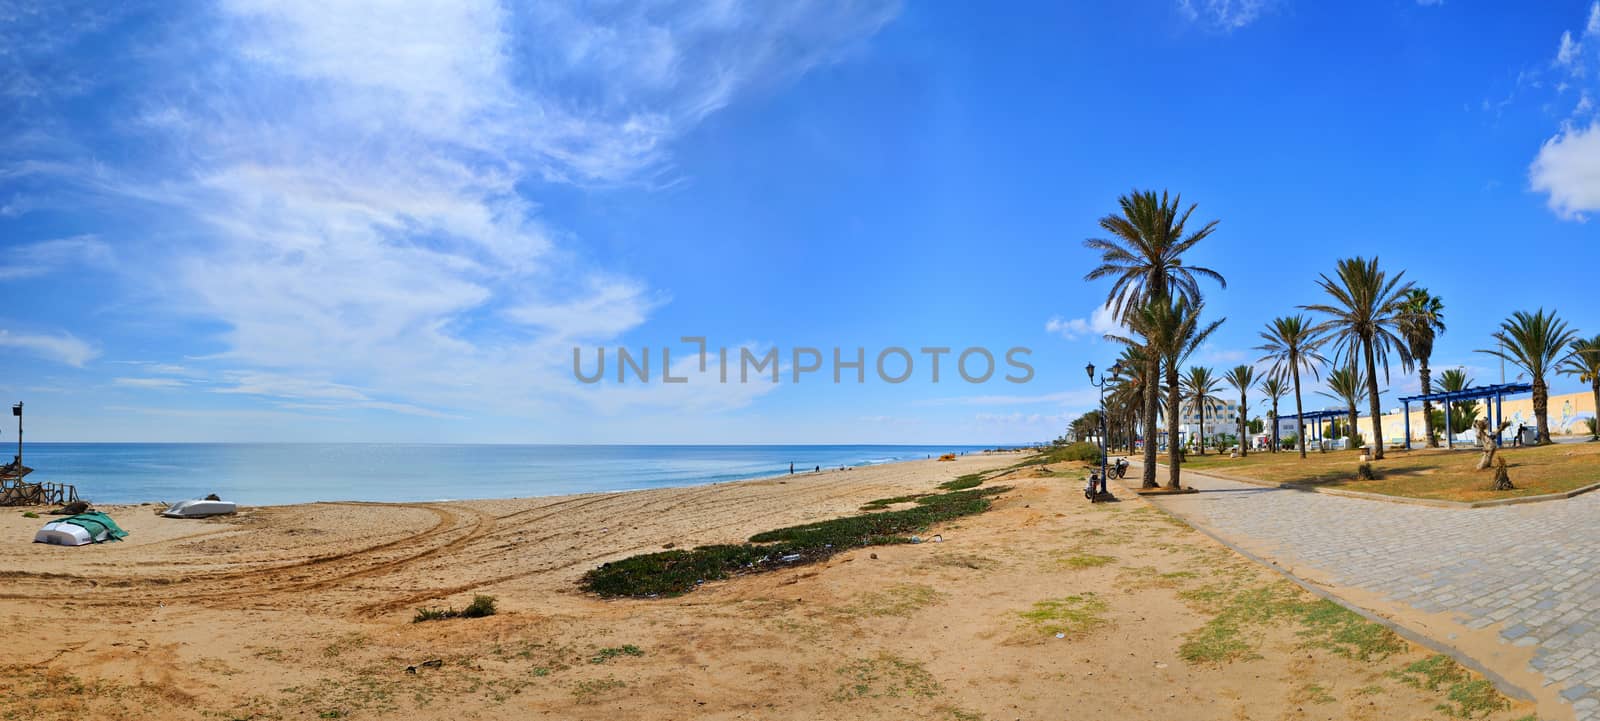 Sunny beach, Hammamet in Tunisia near Mediterranean Sea, Africa, HDR Panorama